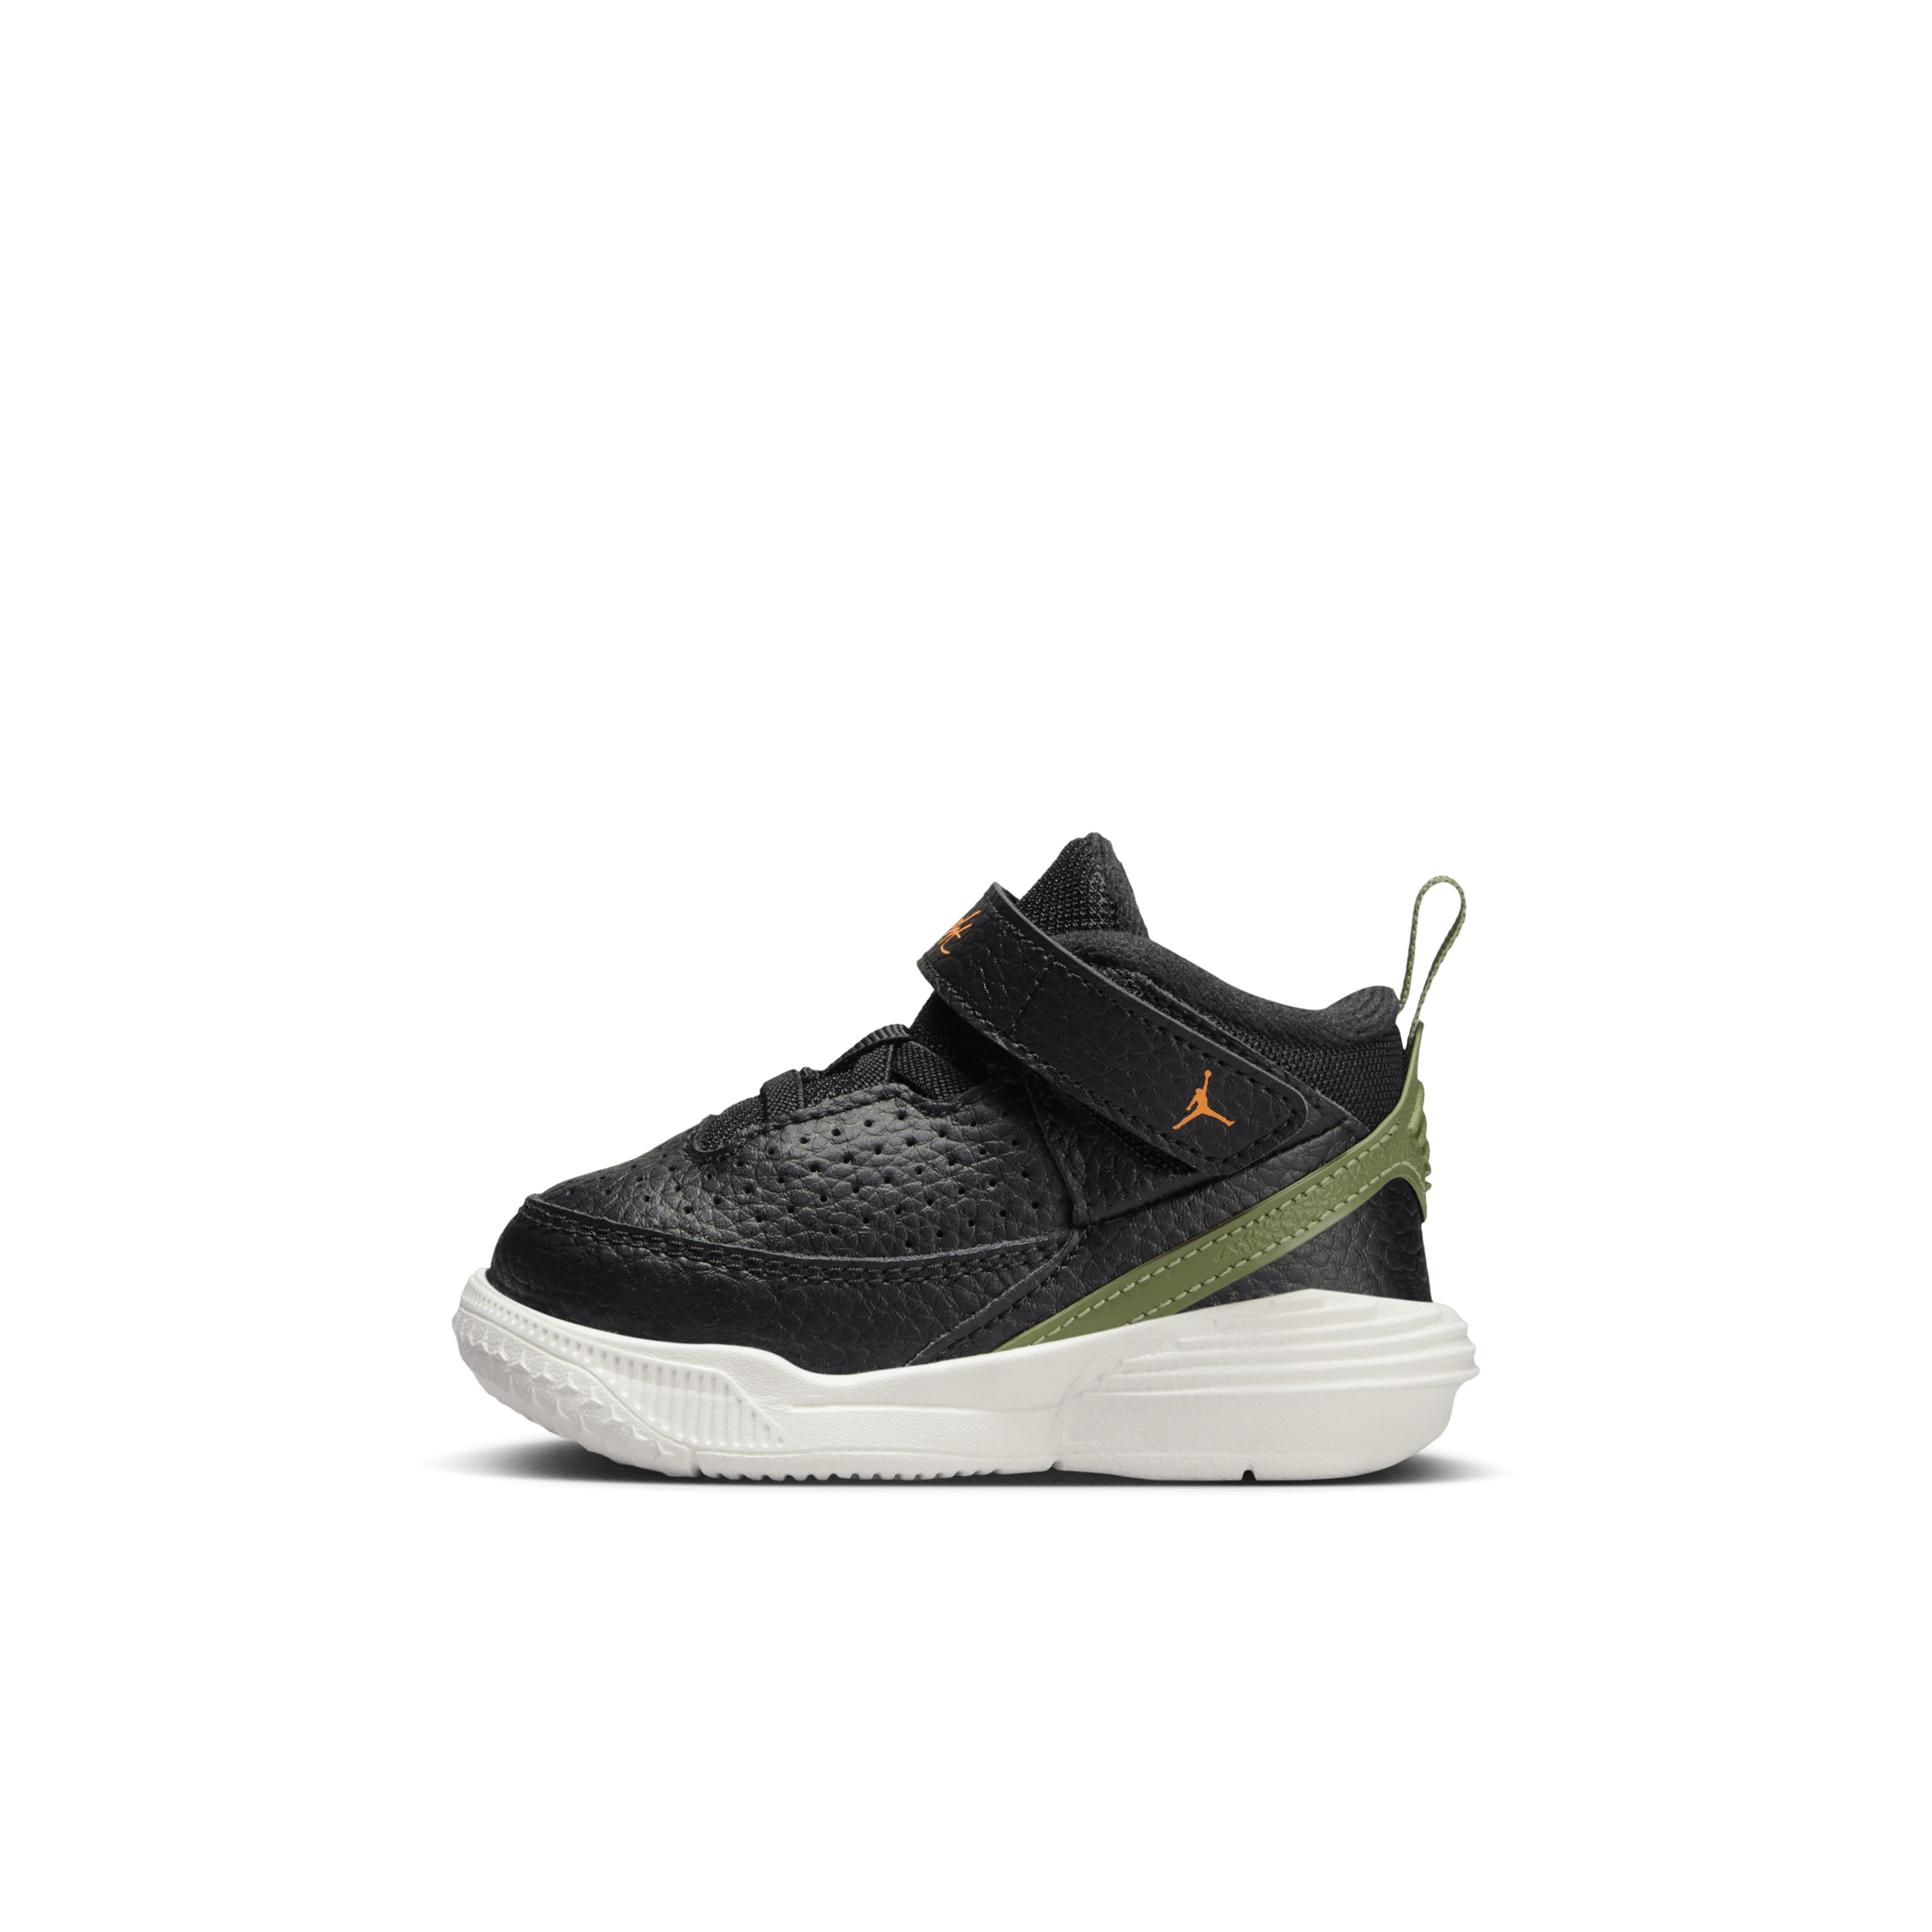 Jordan Max Aura 5-sko til babyer/småbørn - sort